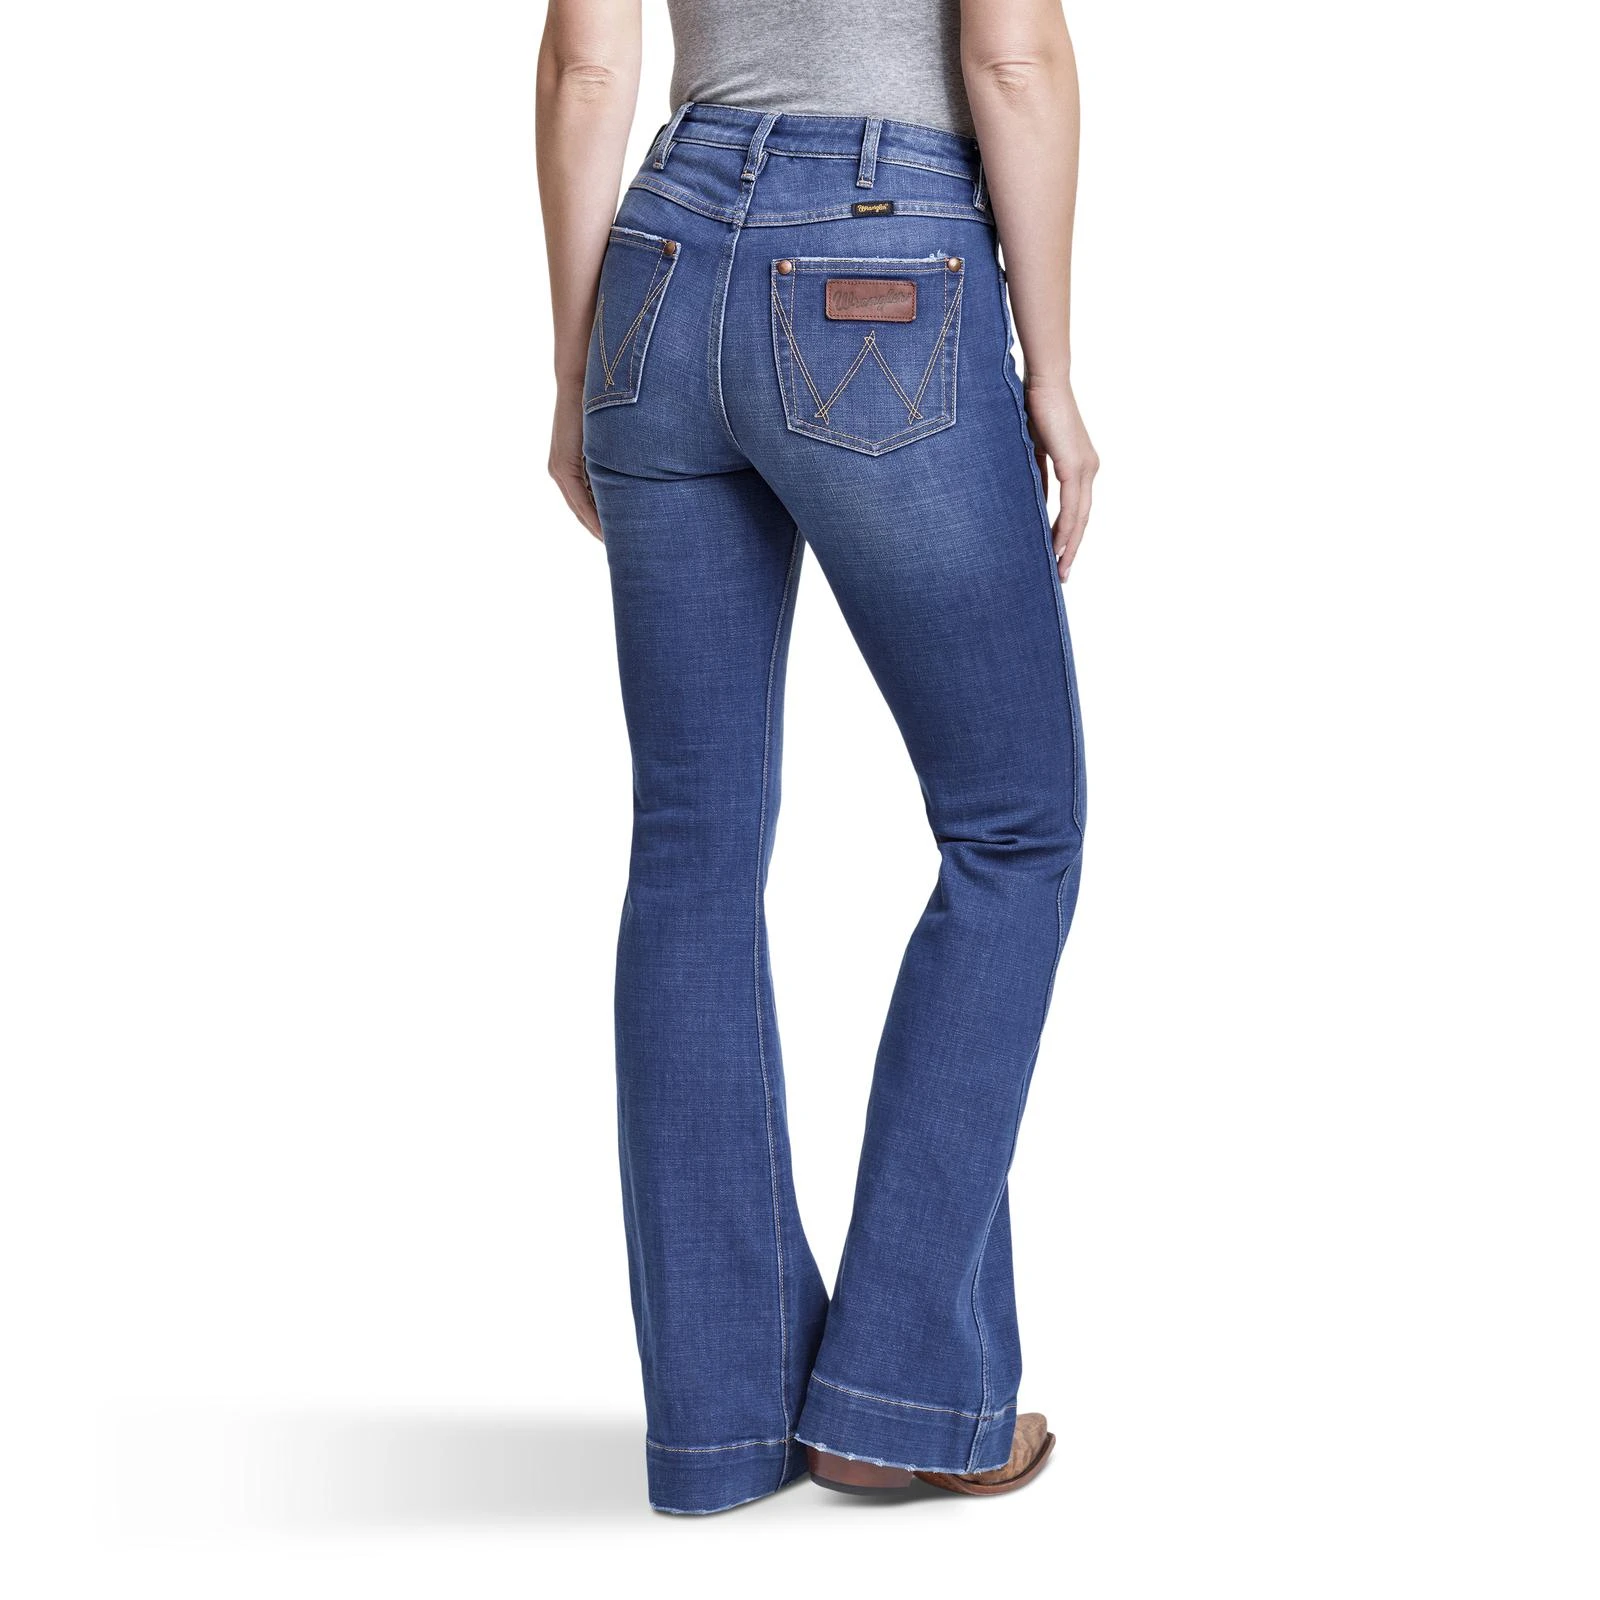 Womens Wrangler Retro Premium High Rise Trouser Jean  Womens JEANS   Wrangler  Women jeans Retro jeans Trouser jeans